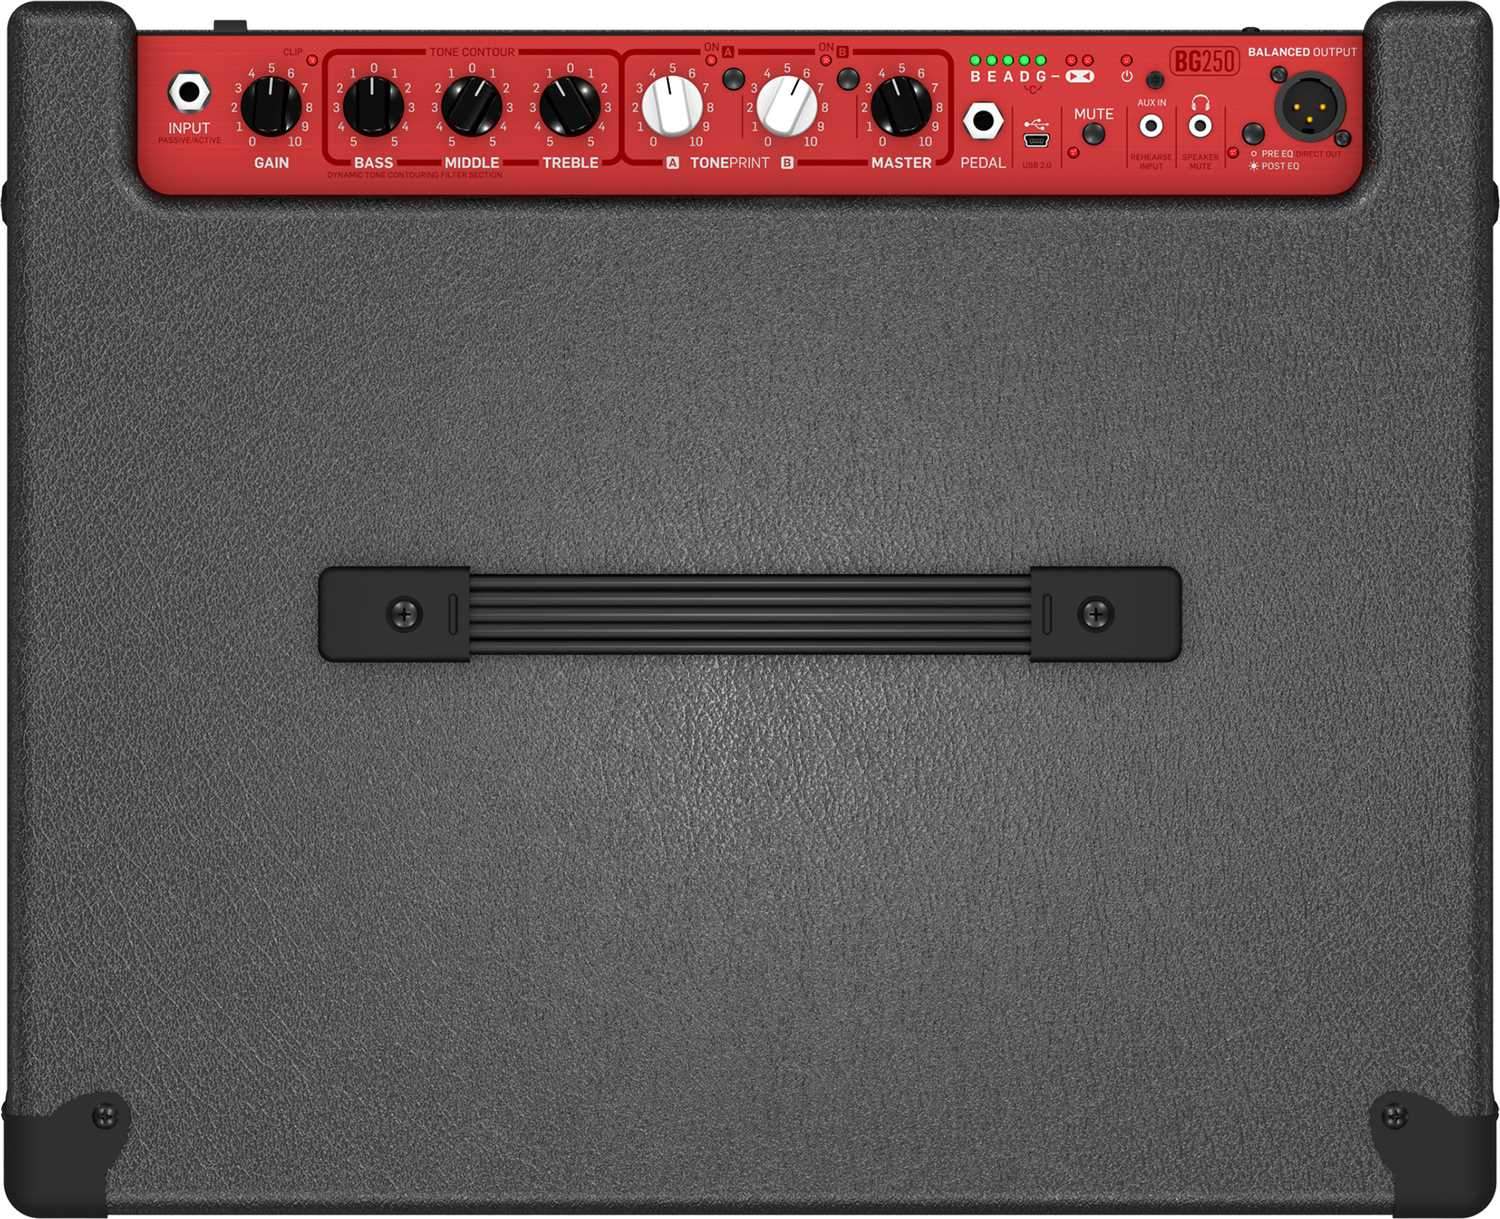 TC Electroni BG250-112 12-inch Bass Combo Amp - ProSound and Stage Lighting